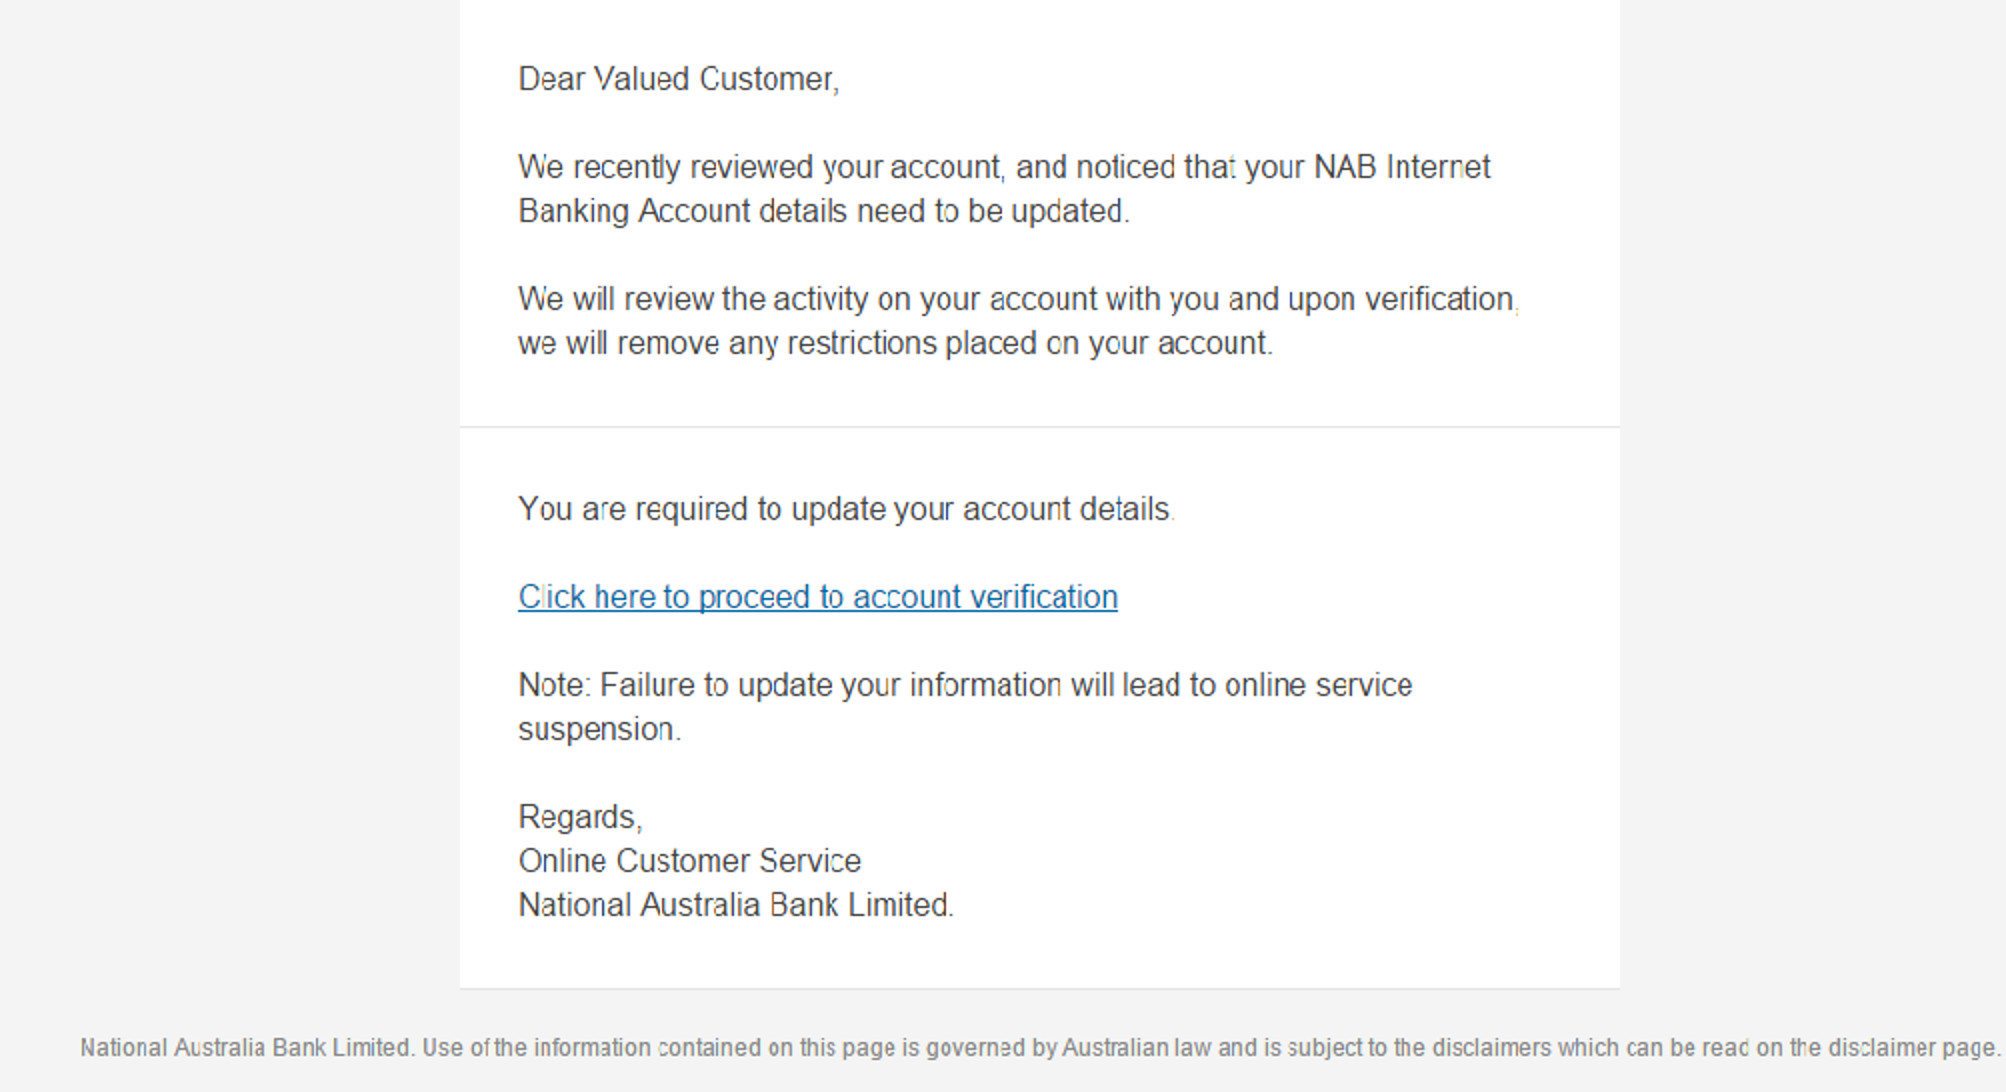 MailShark Phishing email threatens Online Service Suspension